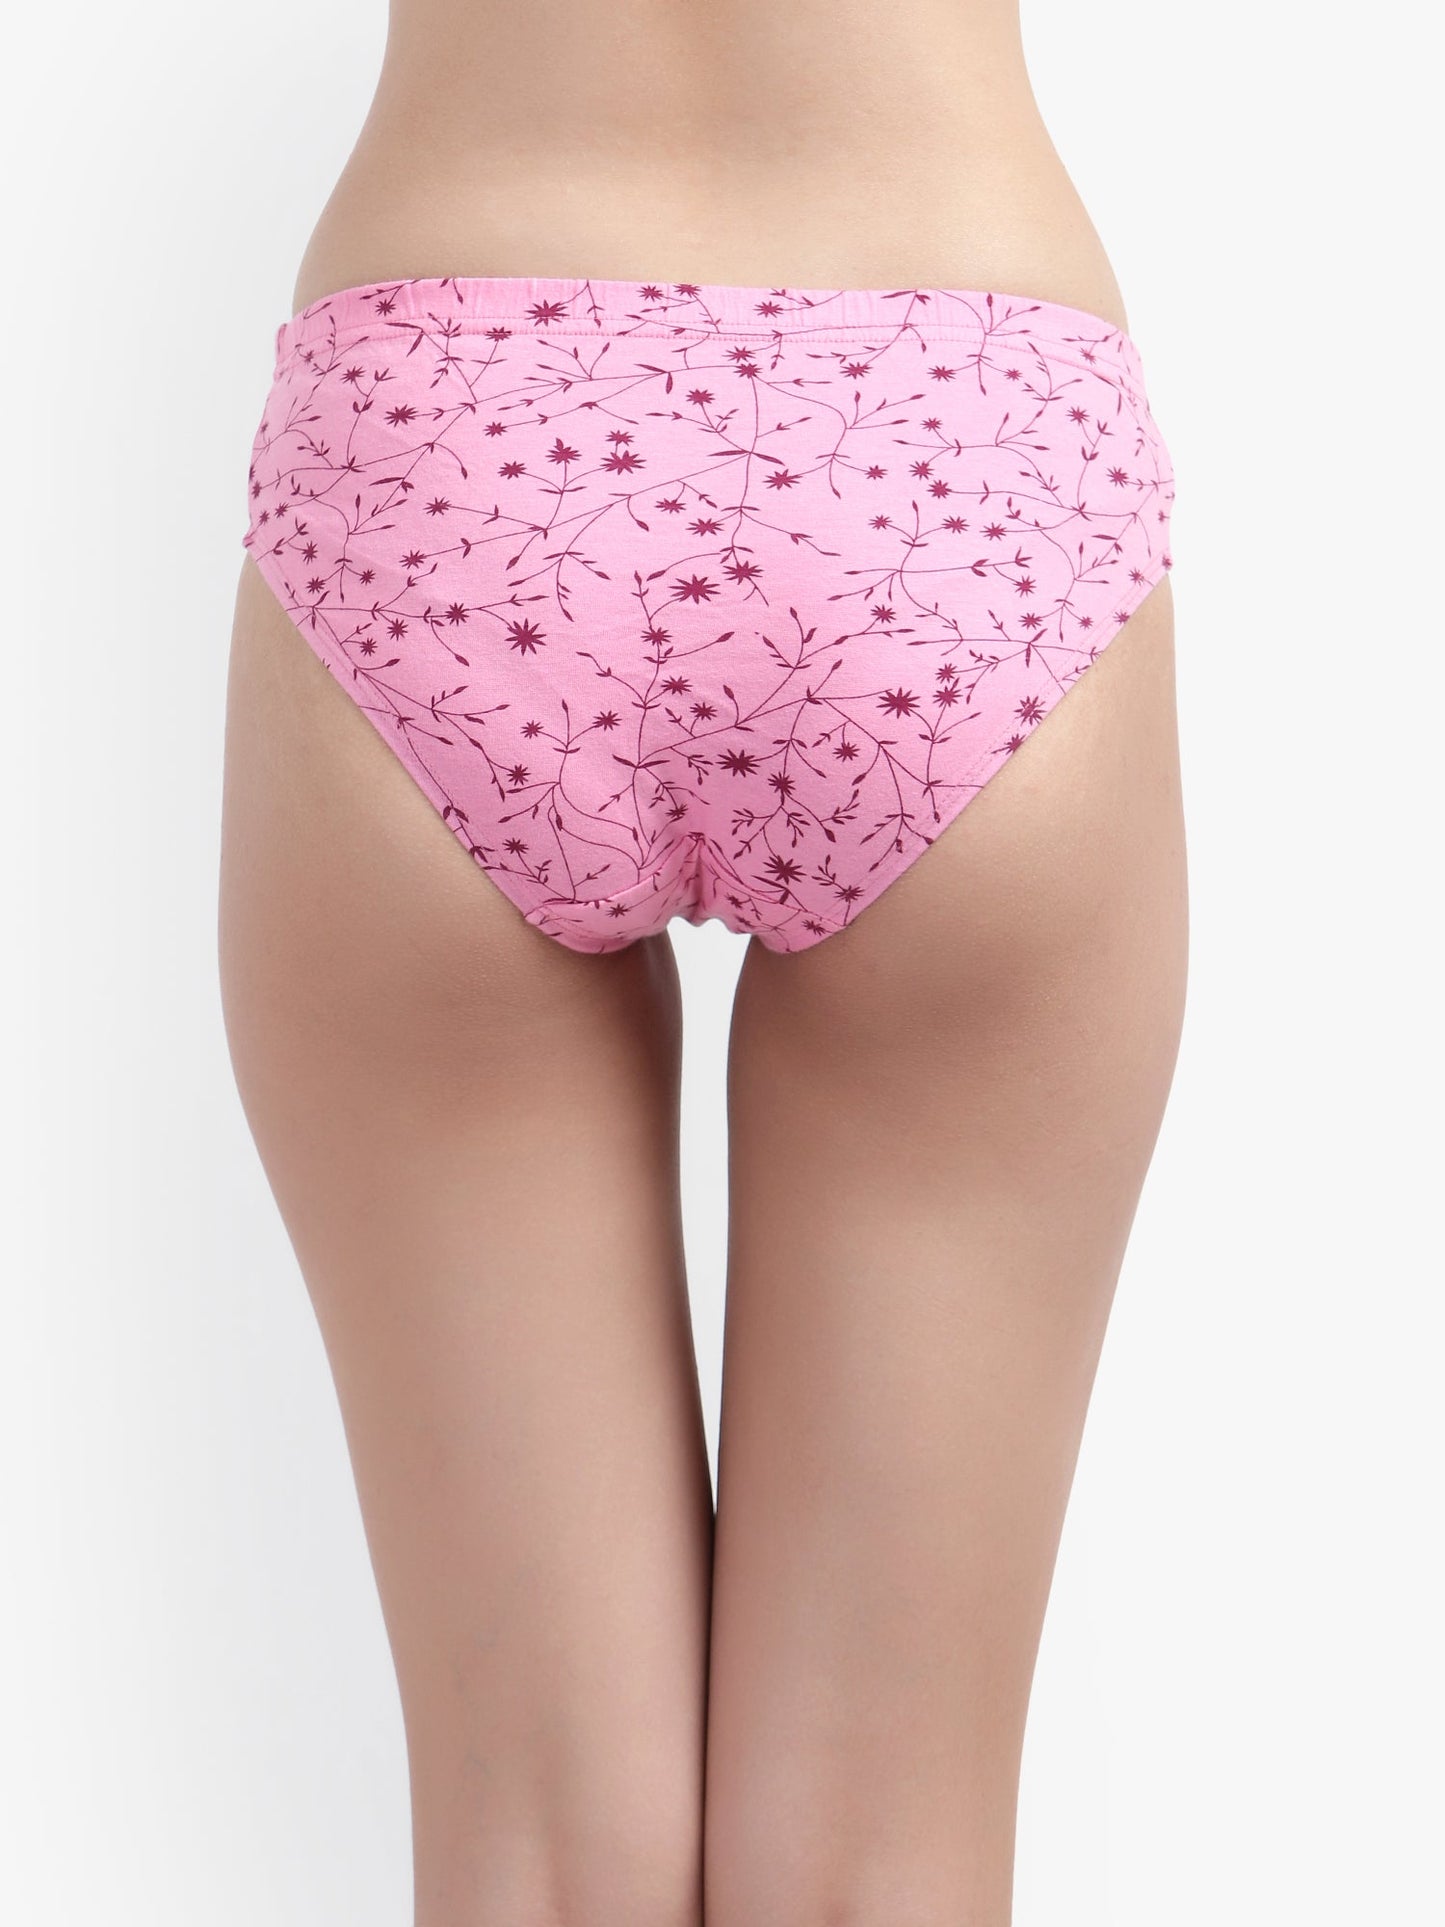 Assorted Printed Pink Cotton Women Panties